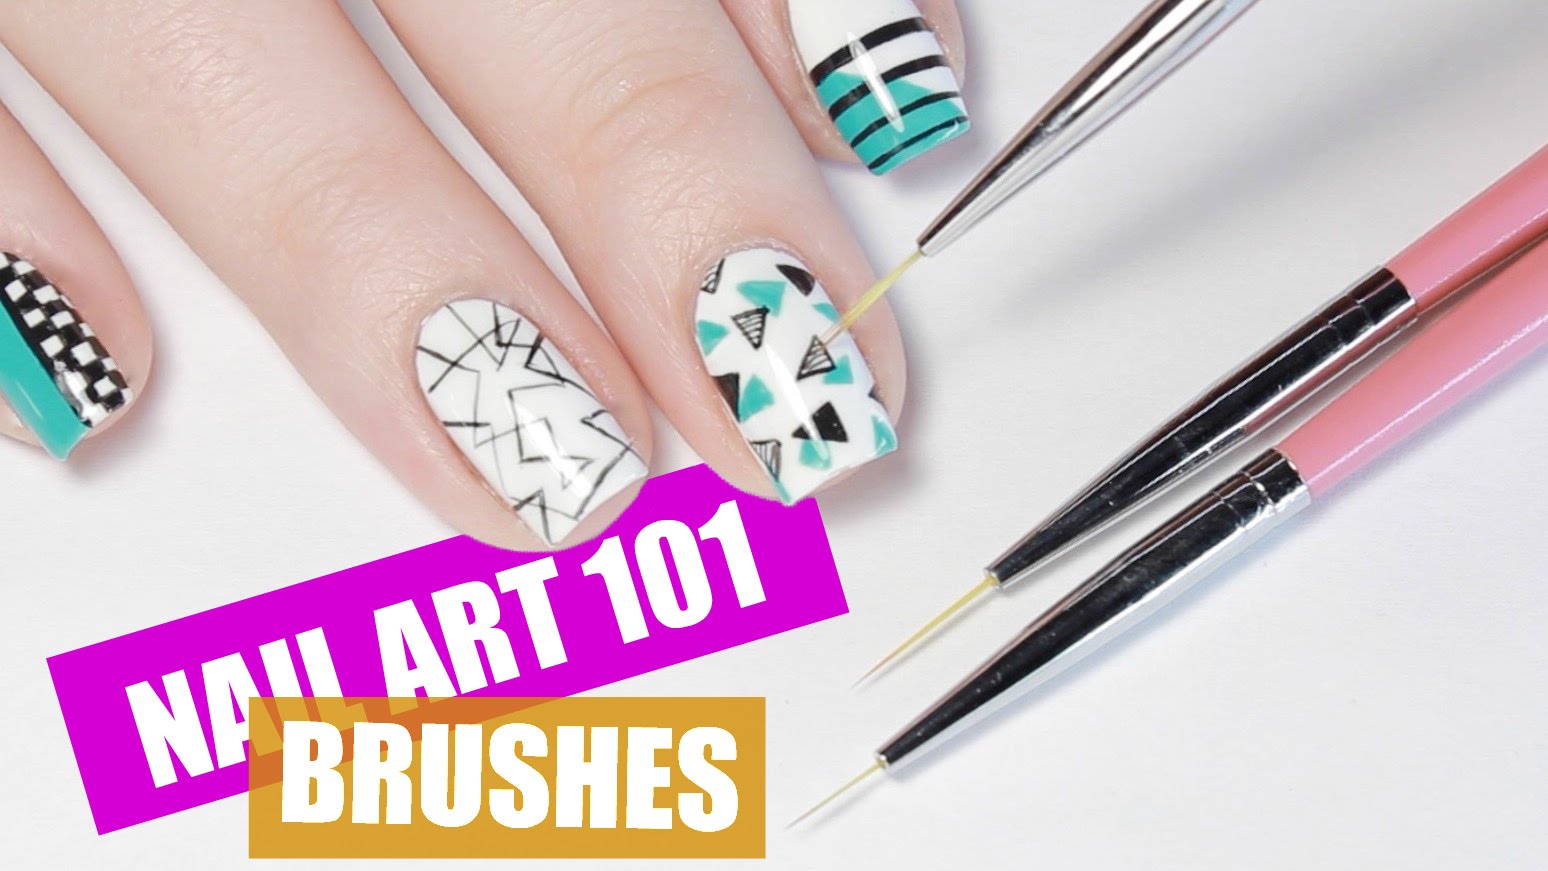 3. Nail Art Brush Set for Beginners - wide 9